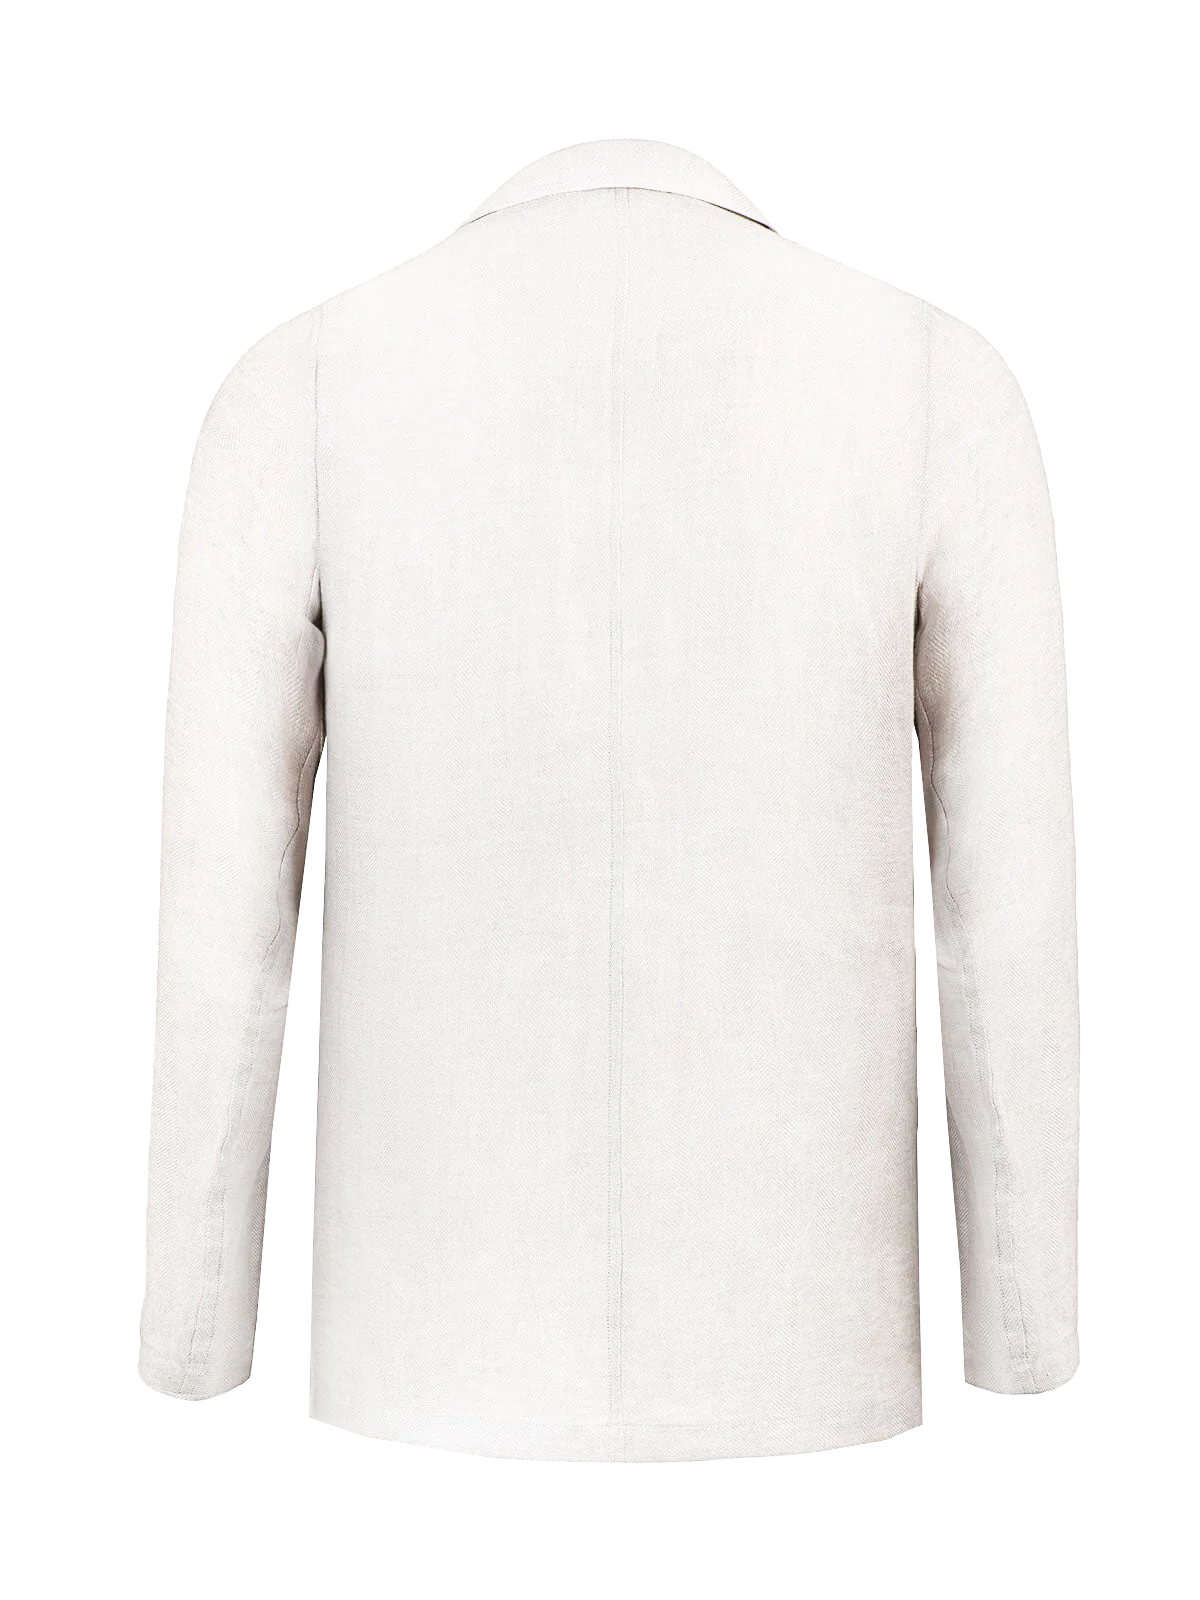 Giacca Sud Man 100% Capri white linen jacket back